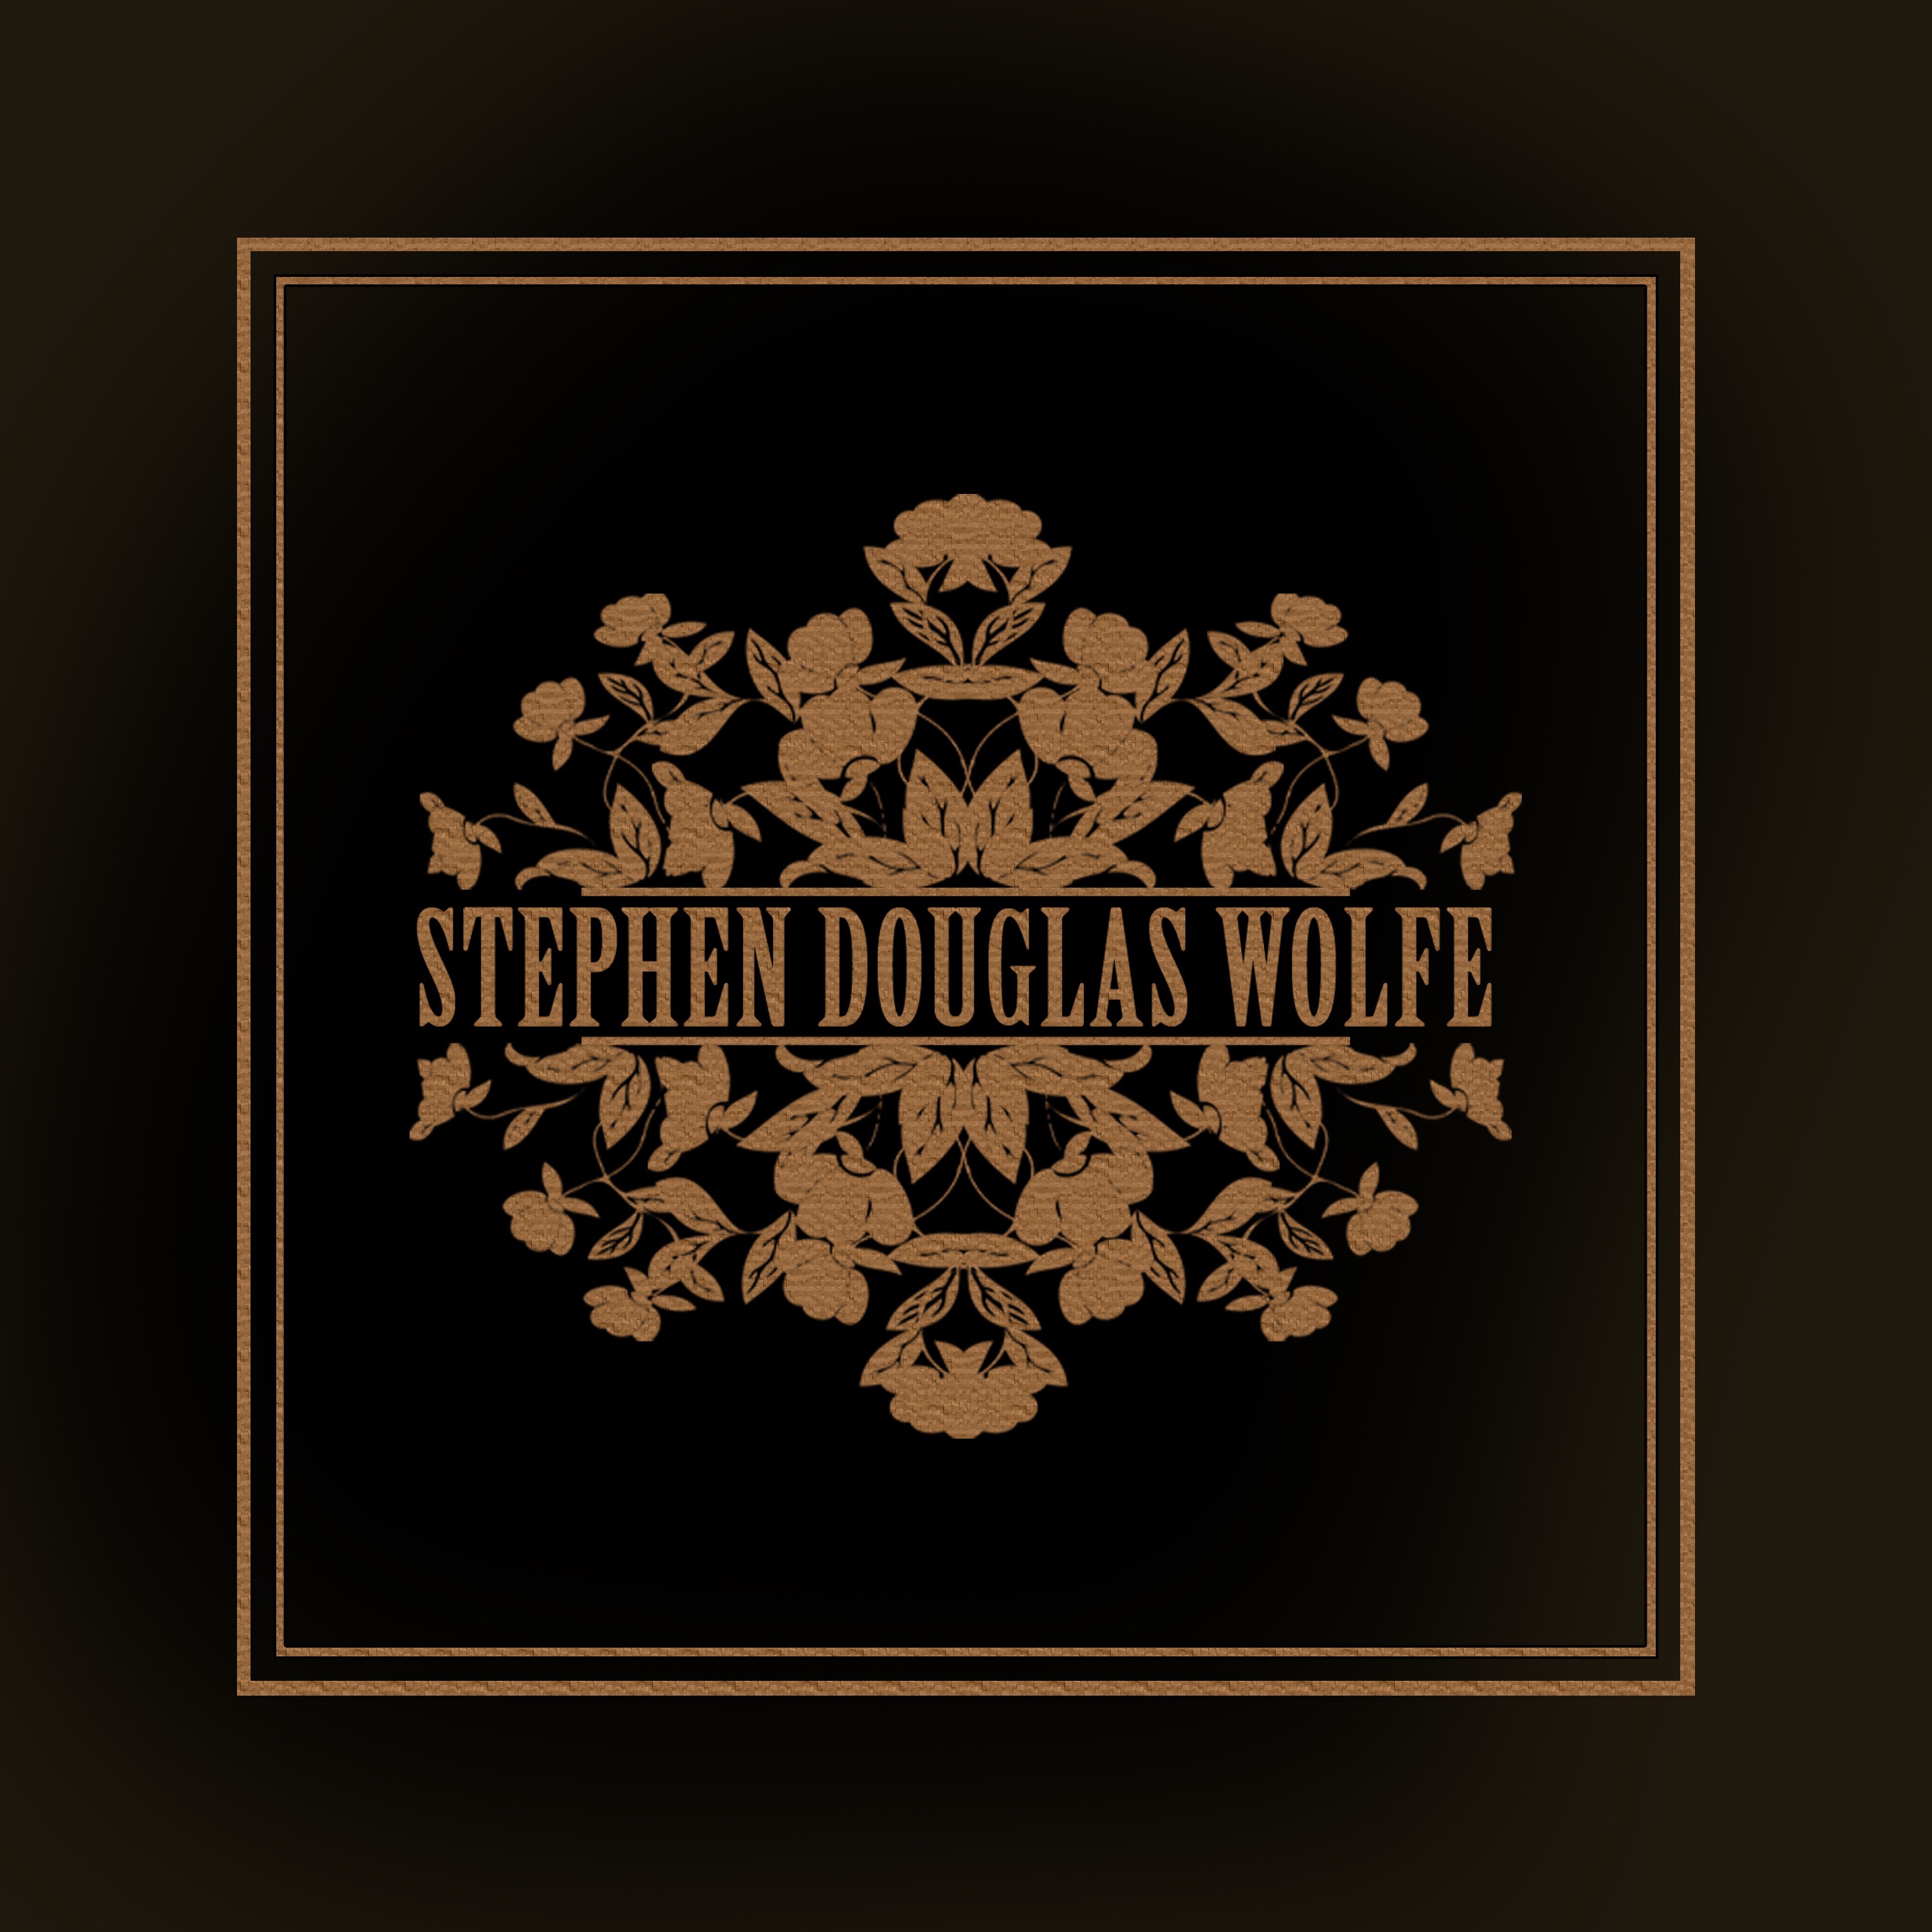 Stephen Douglas Wolfe – “The Animals”